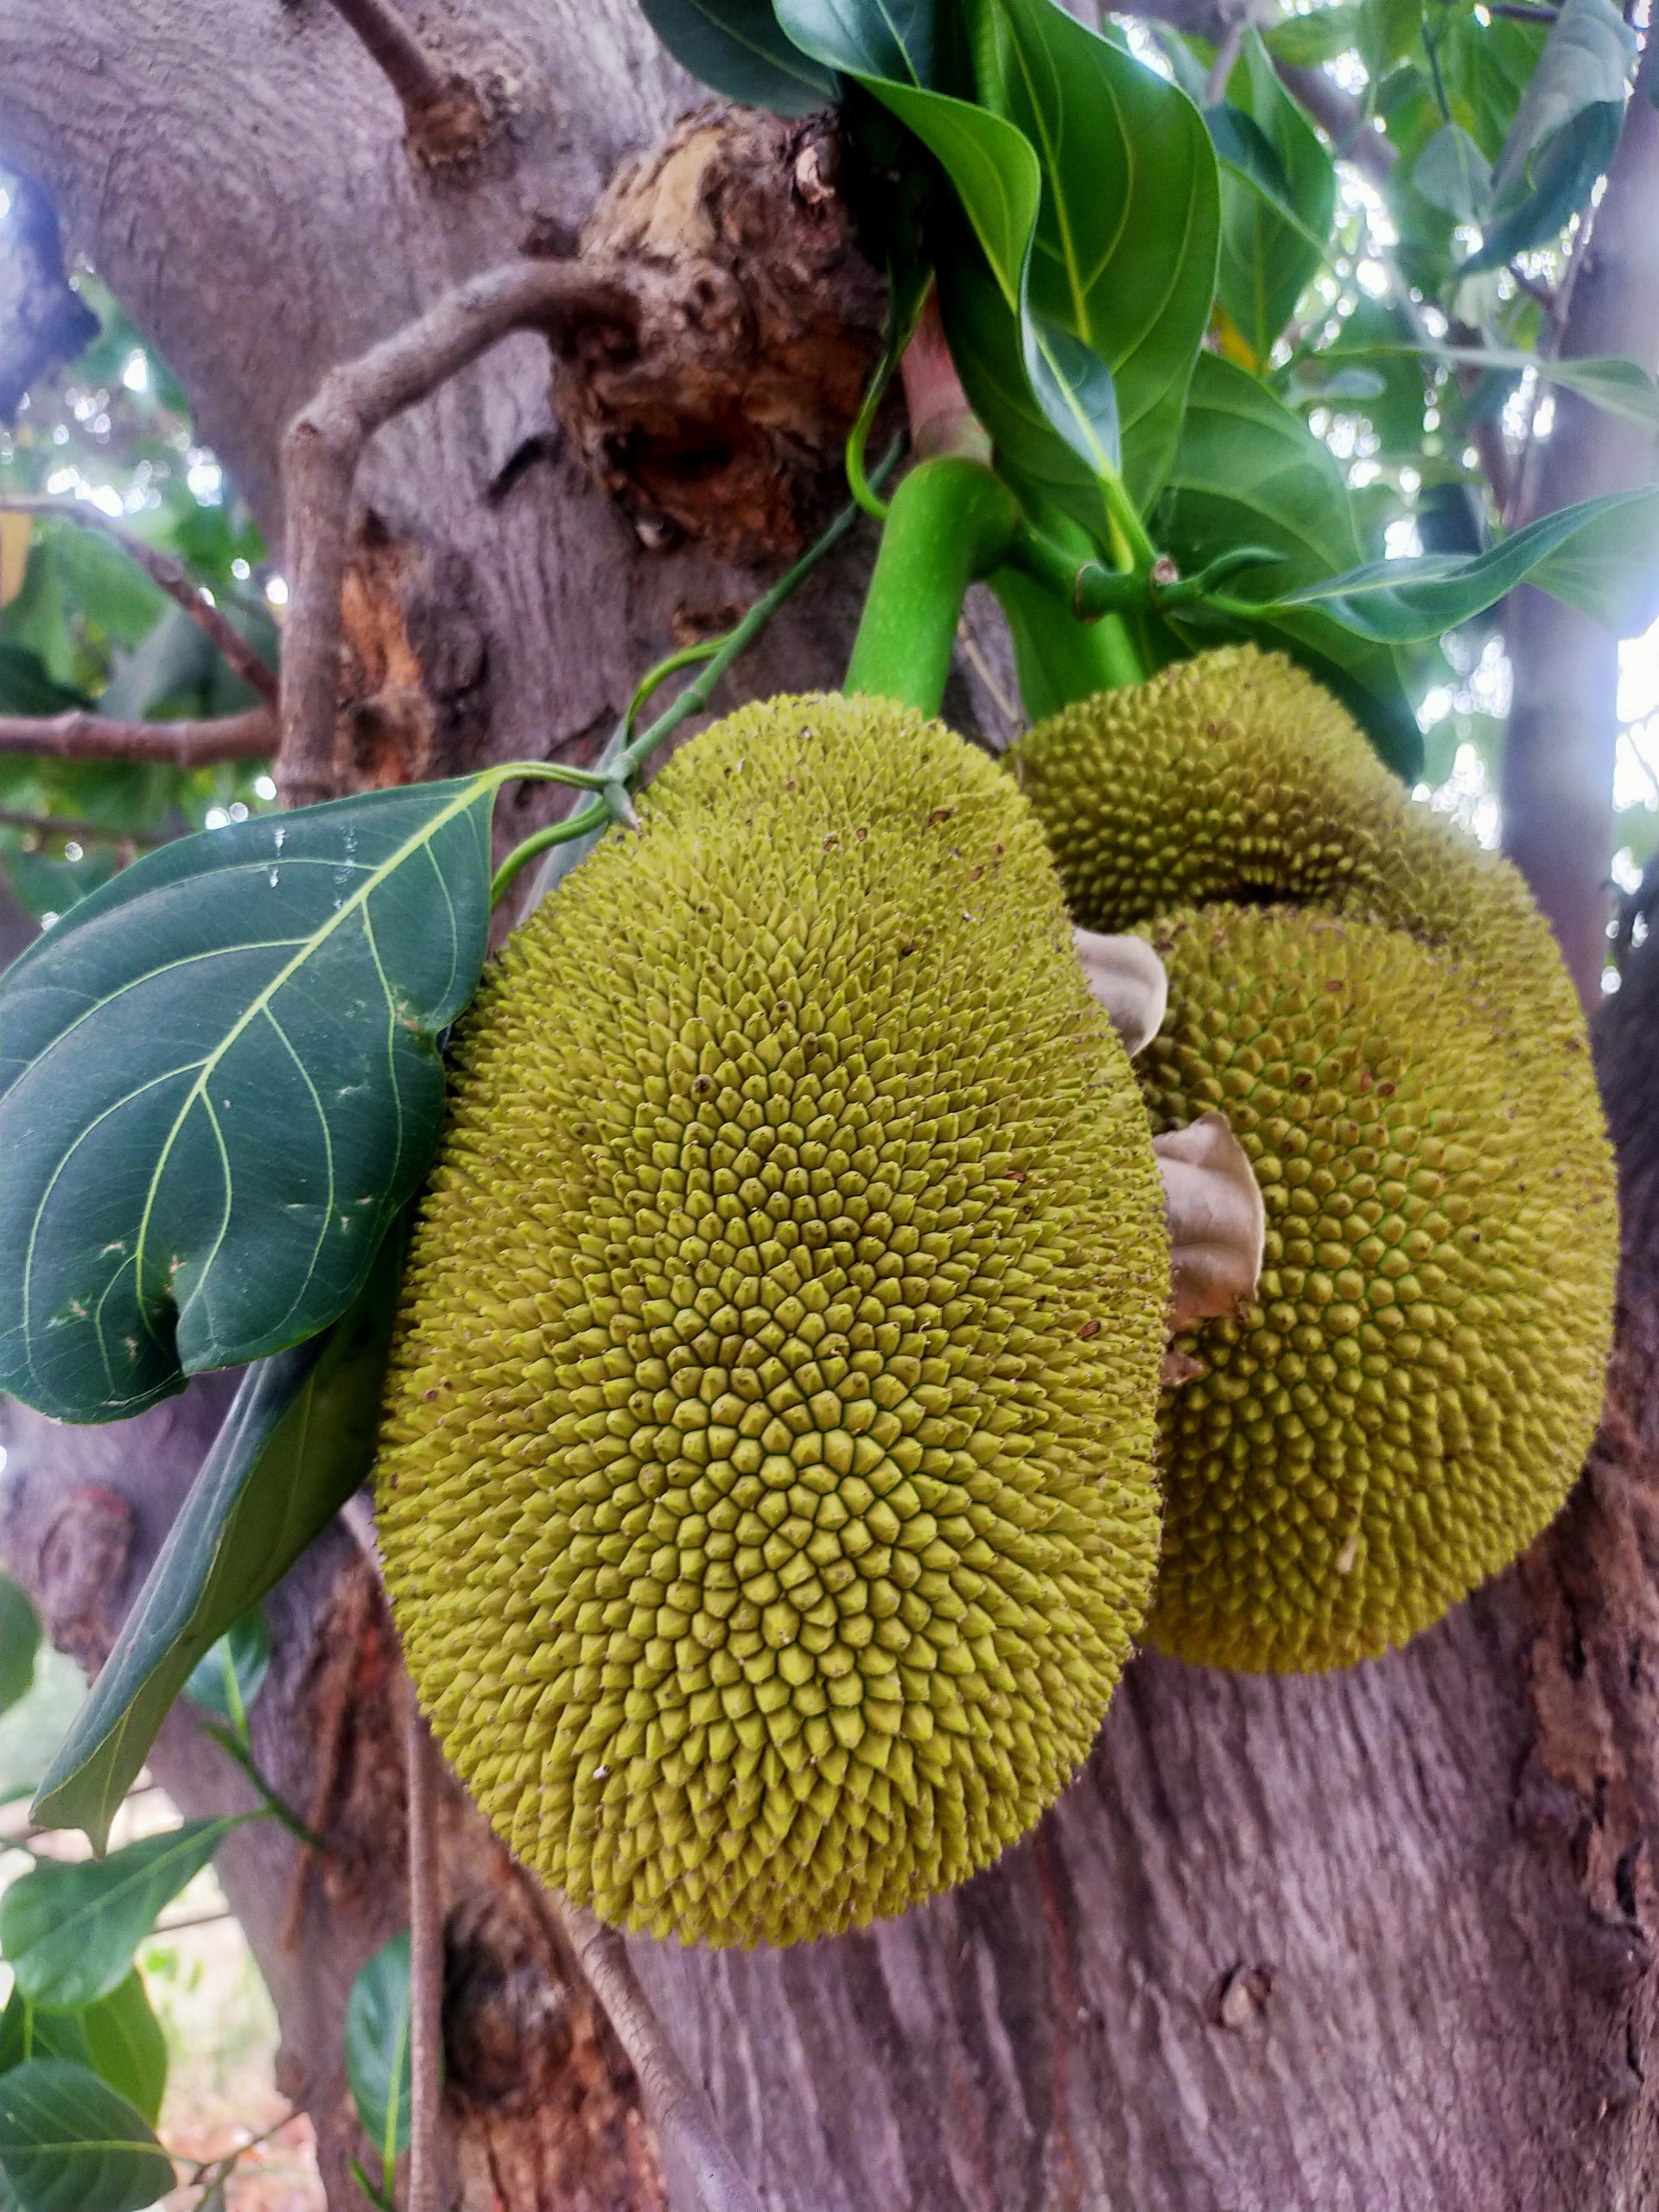 Jackfruit on plant